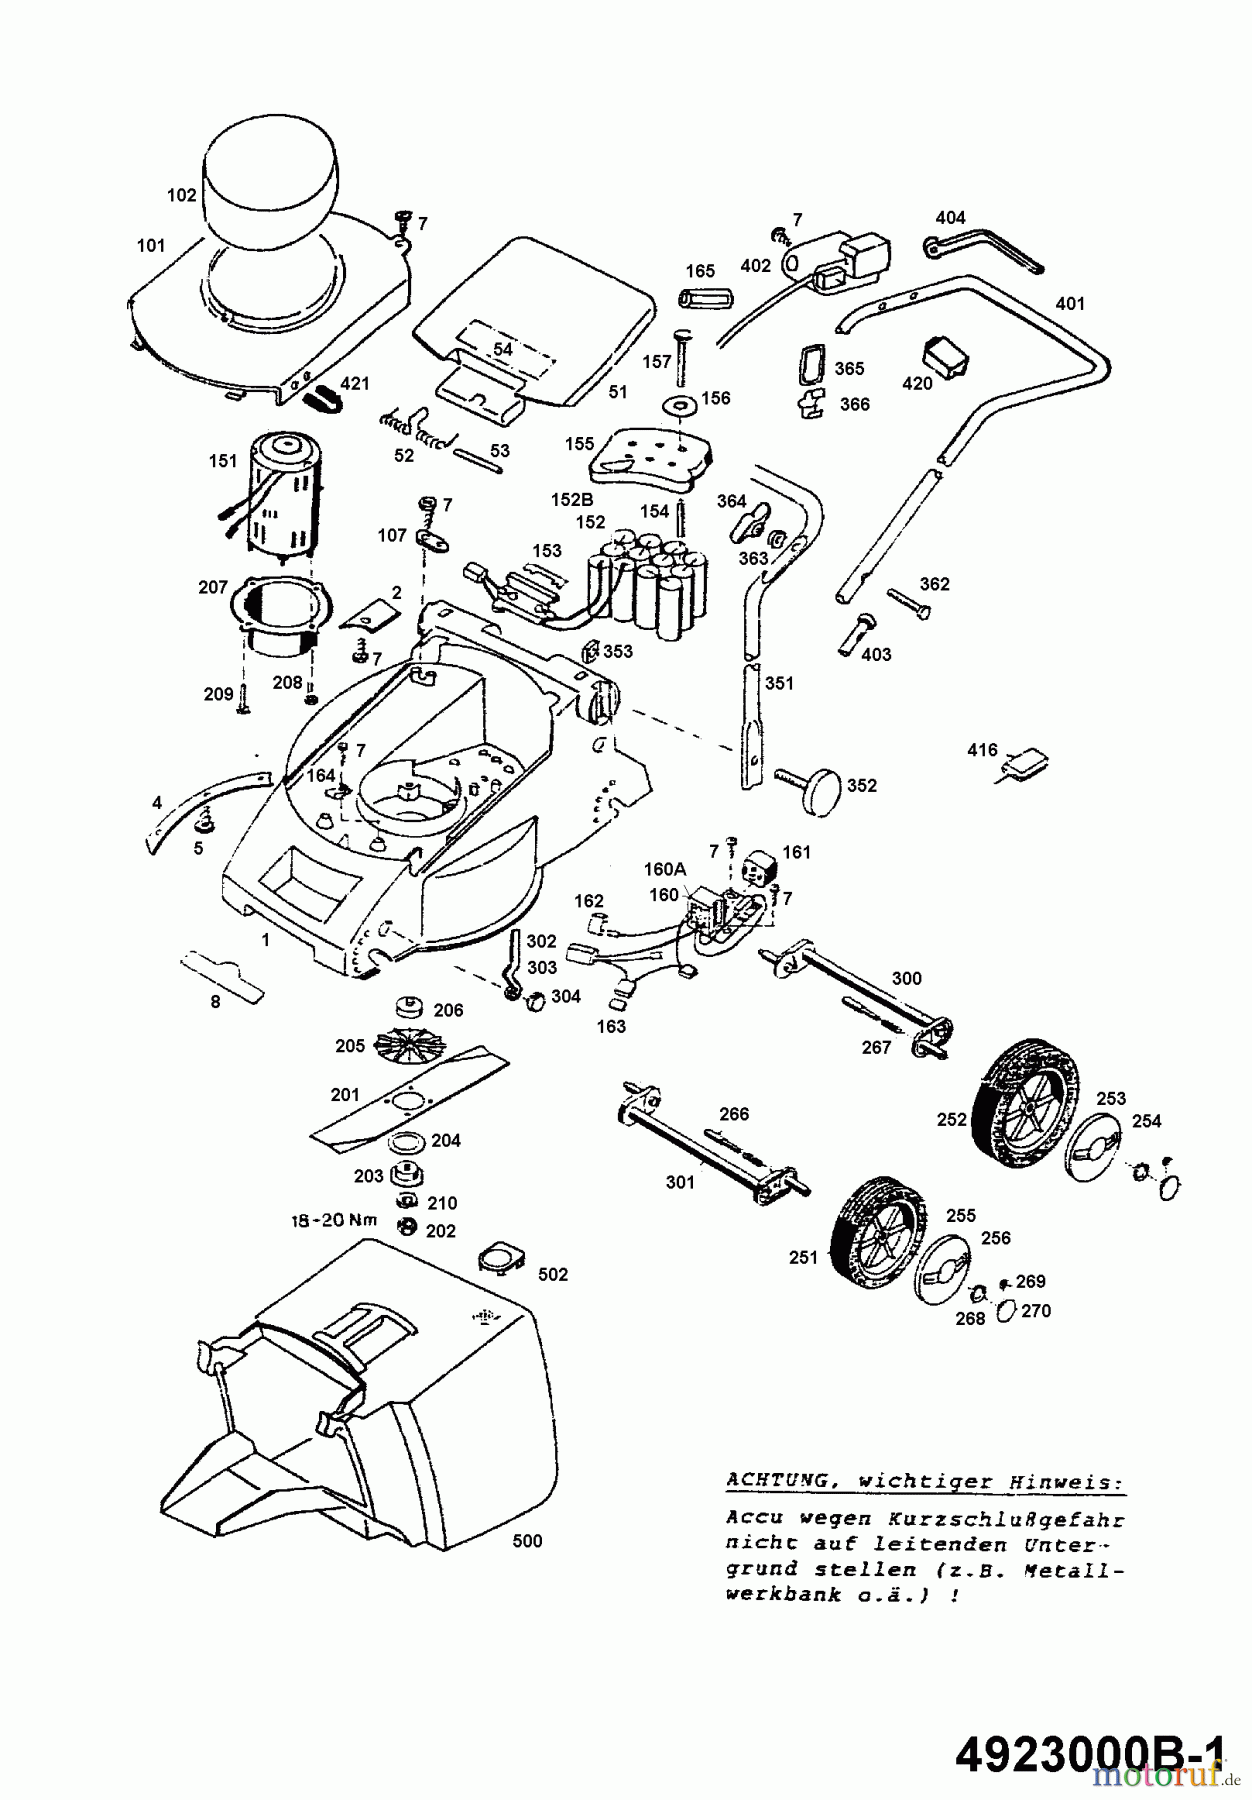  Wolf-Garten Battery mower 2.32 Accu.42 E 4923000 Series B  (1995) Basic machine